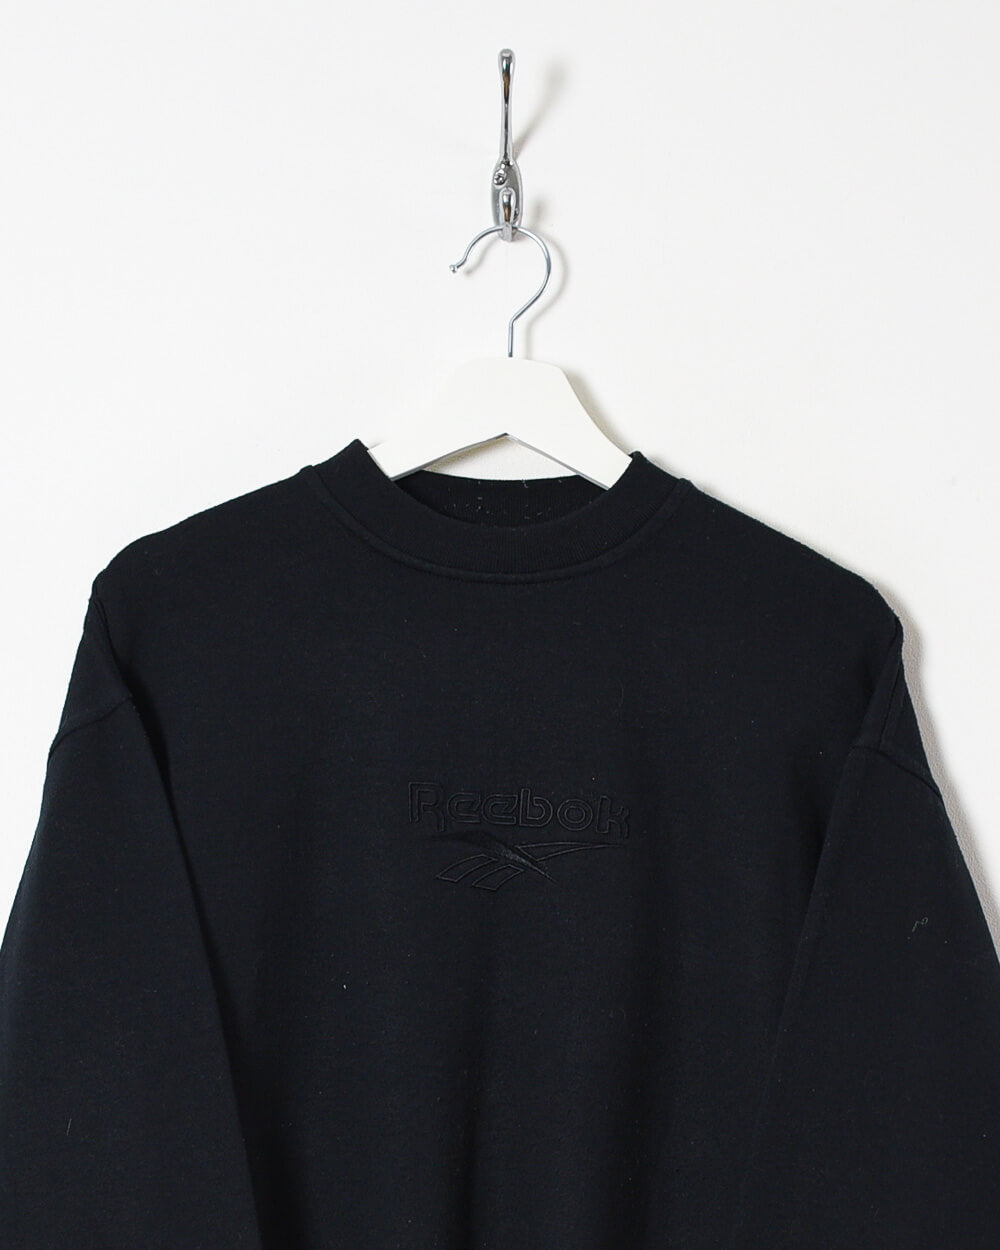 Black Reebok Sweatshirt - Small